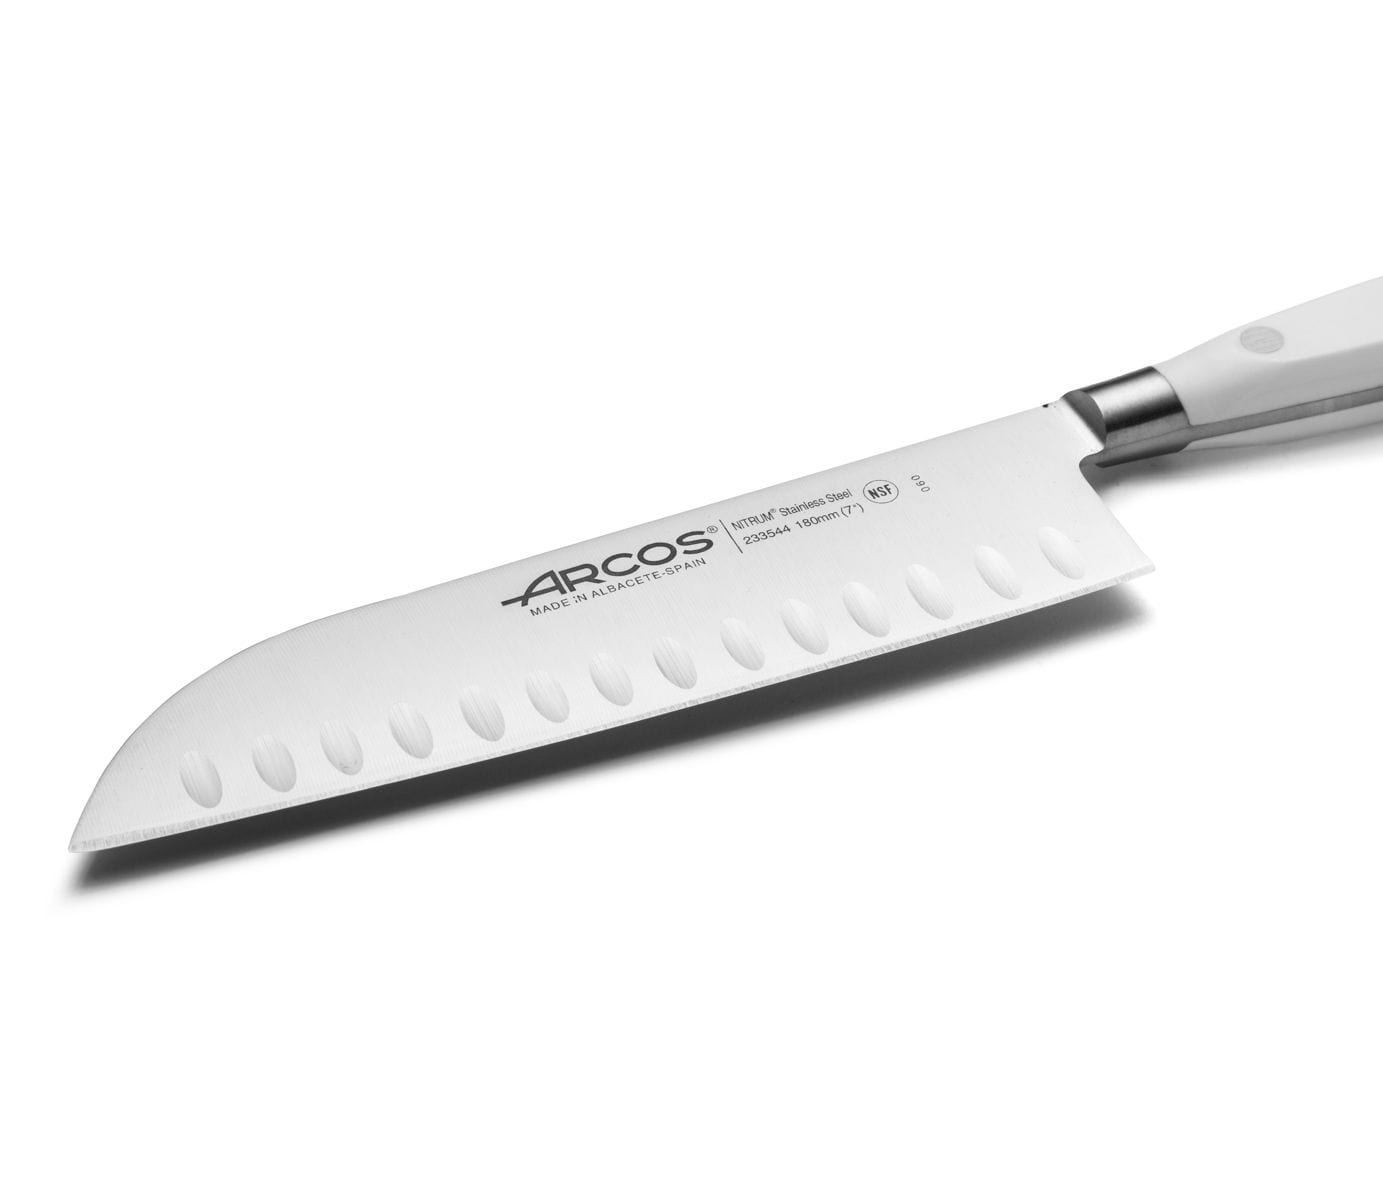 ARCOS RIVIERA BLANC KNIFE 300mm - The Hamoneria